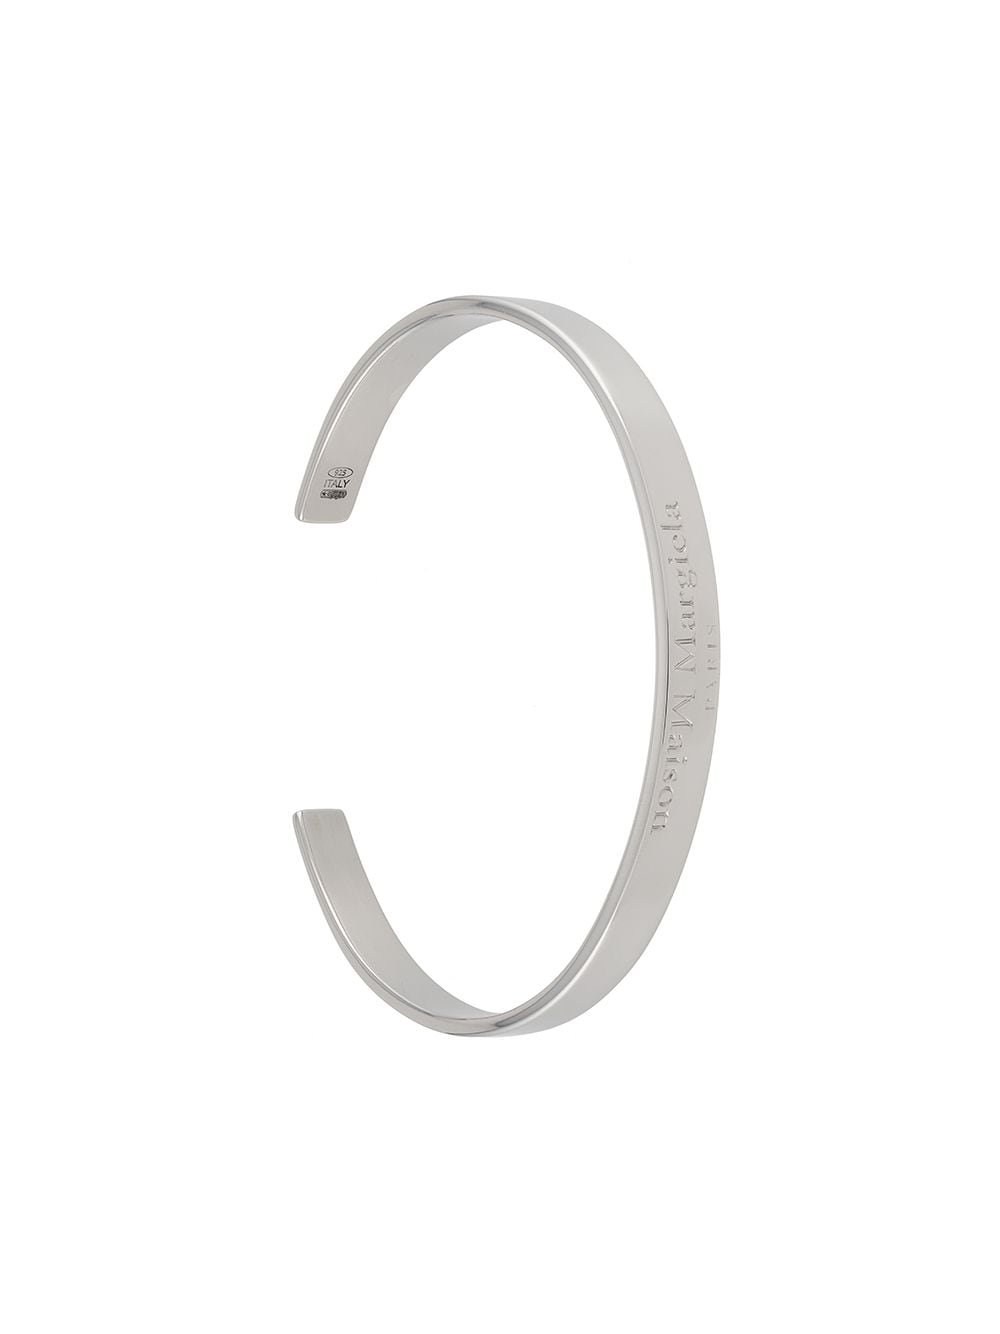 Maison Margiela logo-engraved cuff bracelet - Silver von Maison Margiela